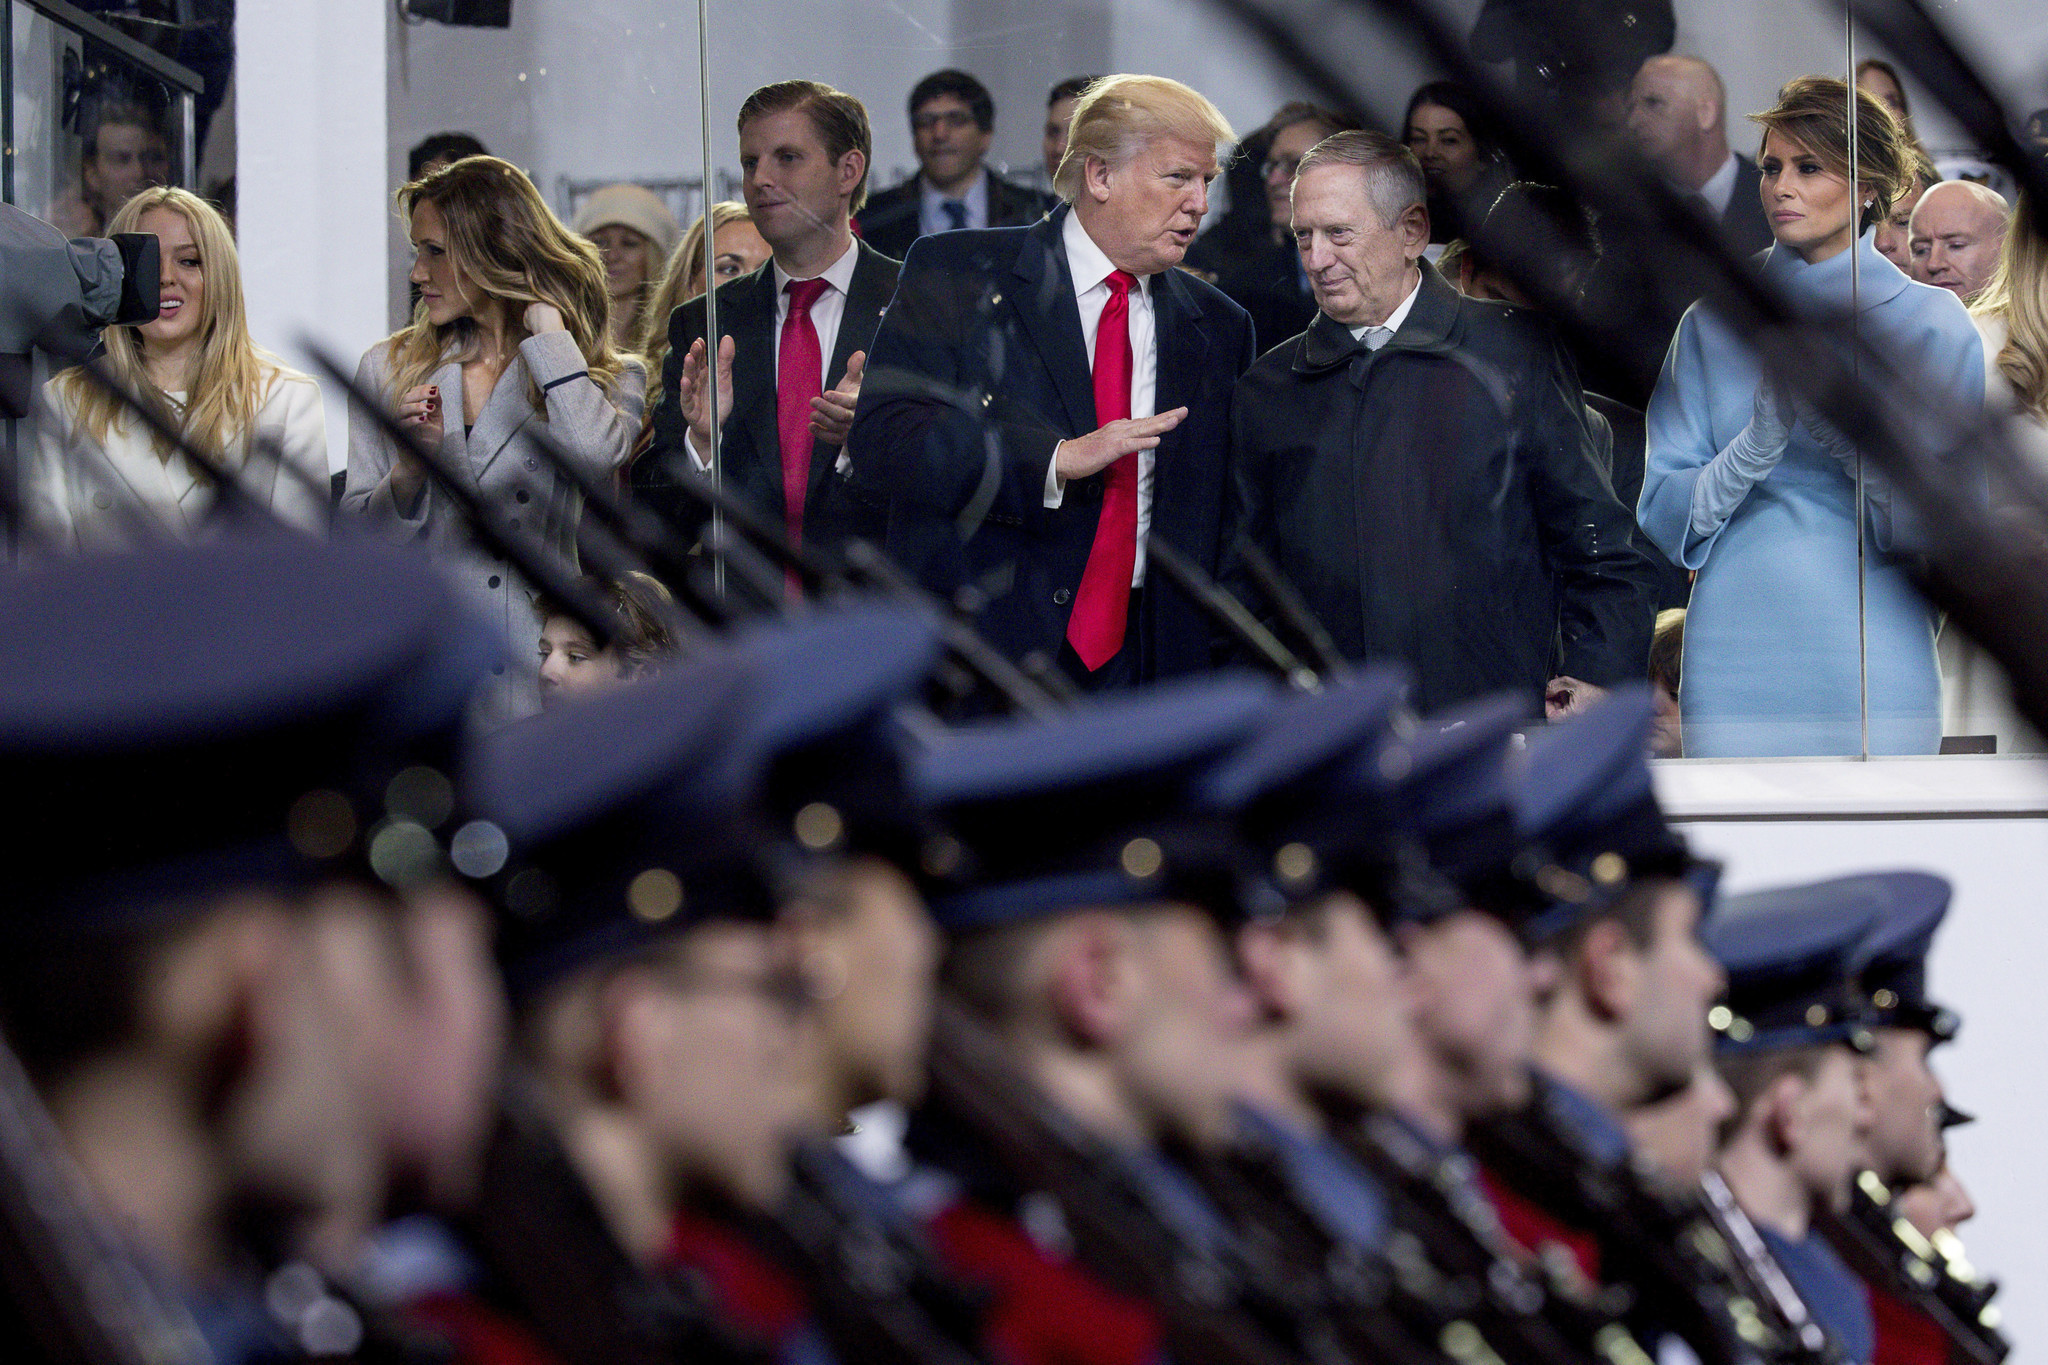 3 military takeaways from Trump inauguration speech - The San Diego Union-Tribune